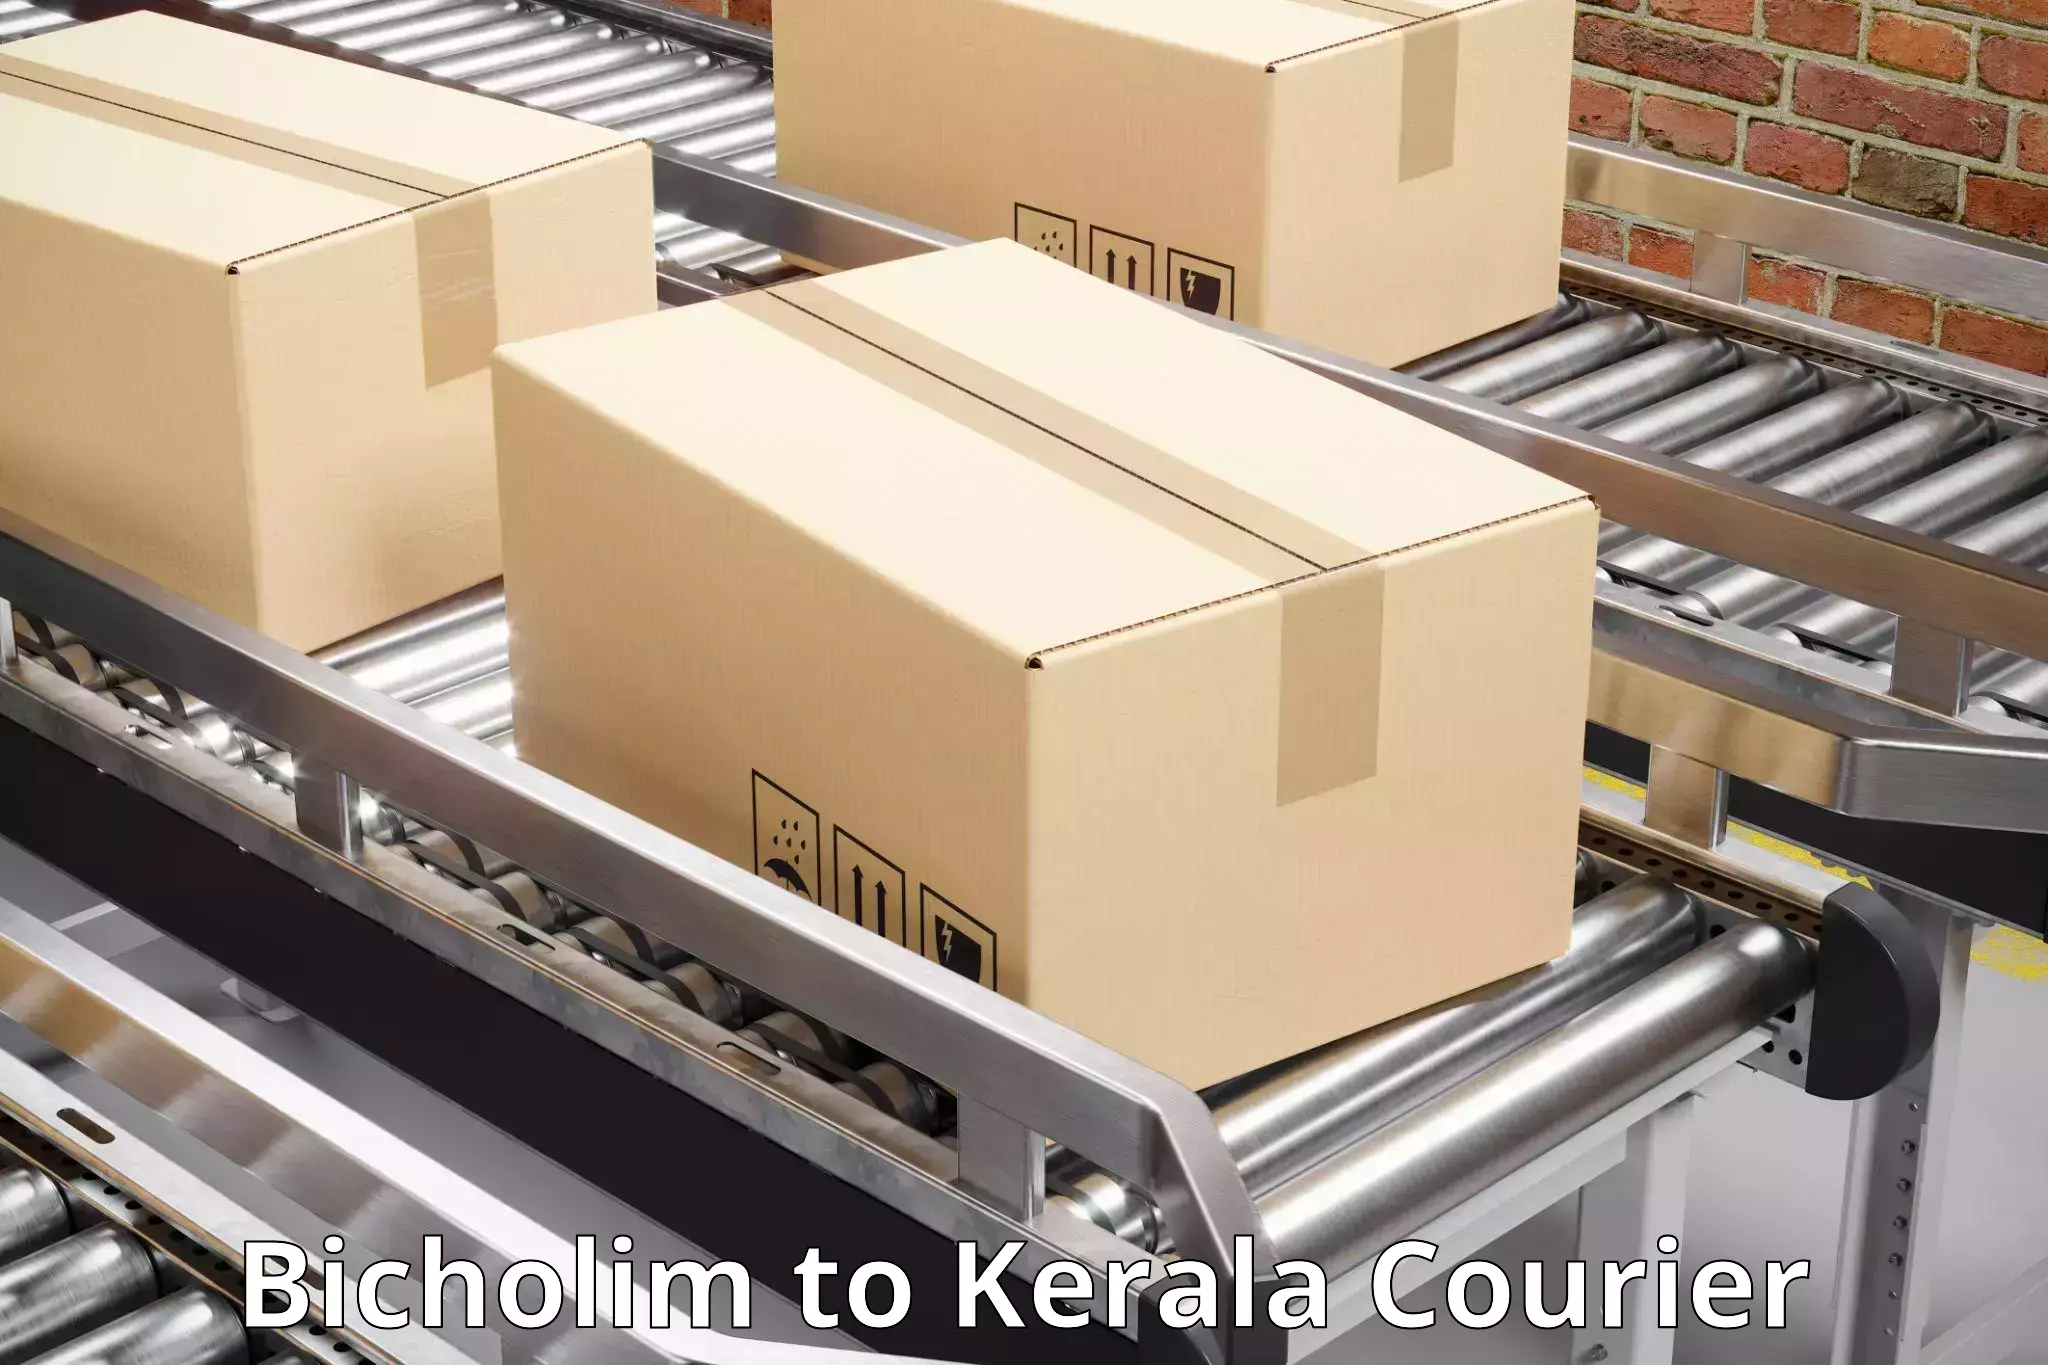 On-call courier service Bicholim to Kunnamkulam